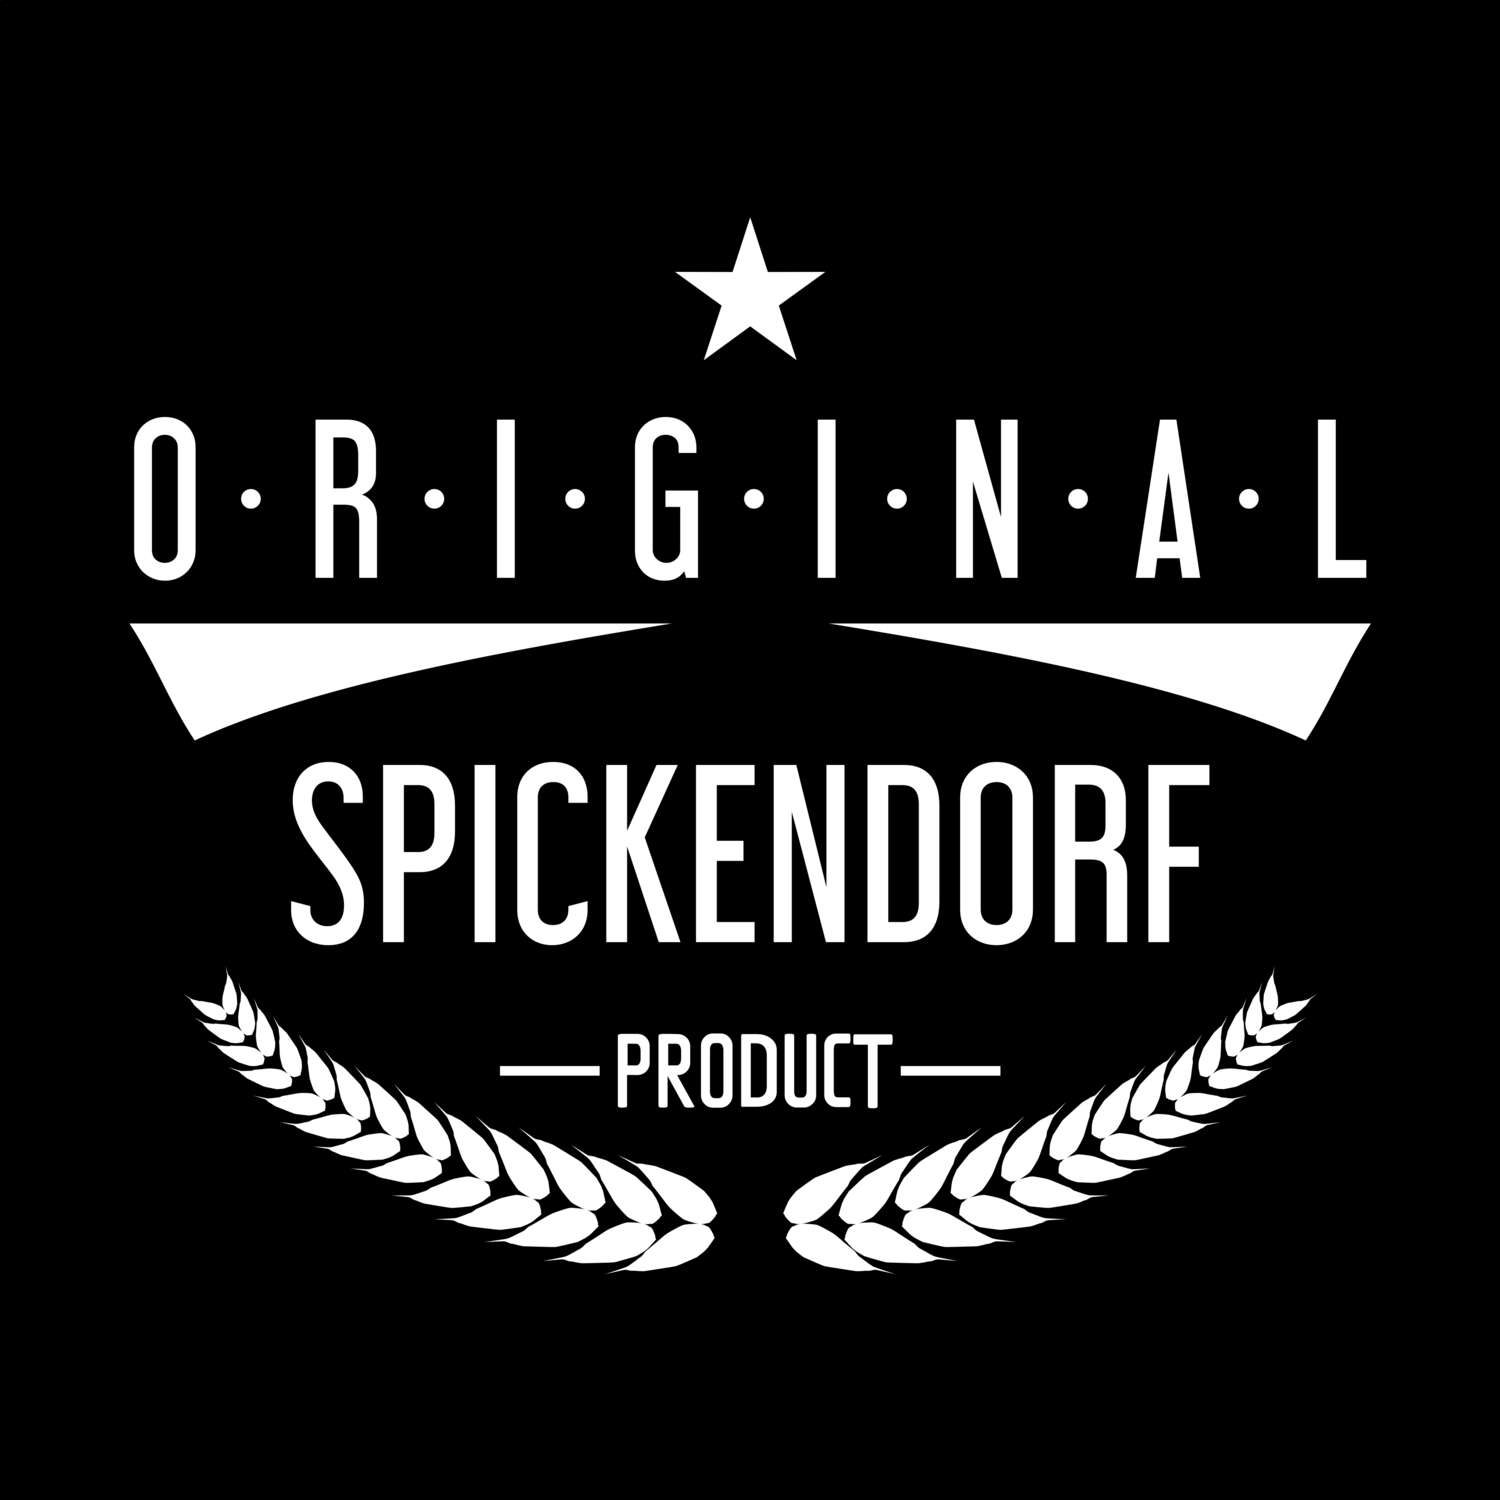 Spickendorf T-Shirt »Original Product«